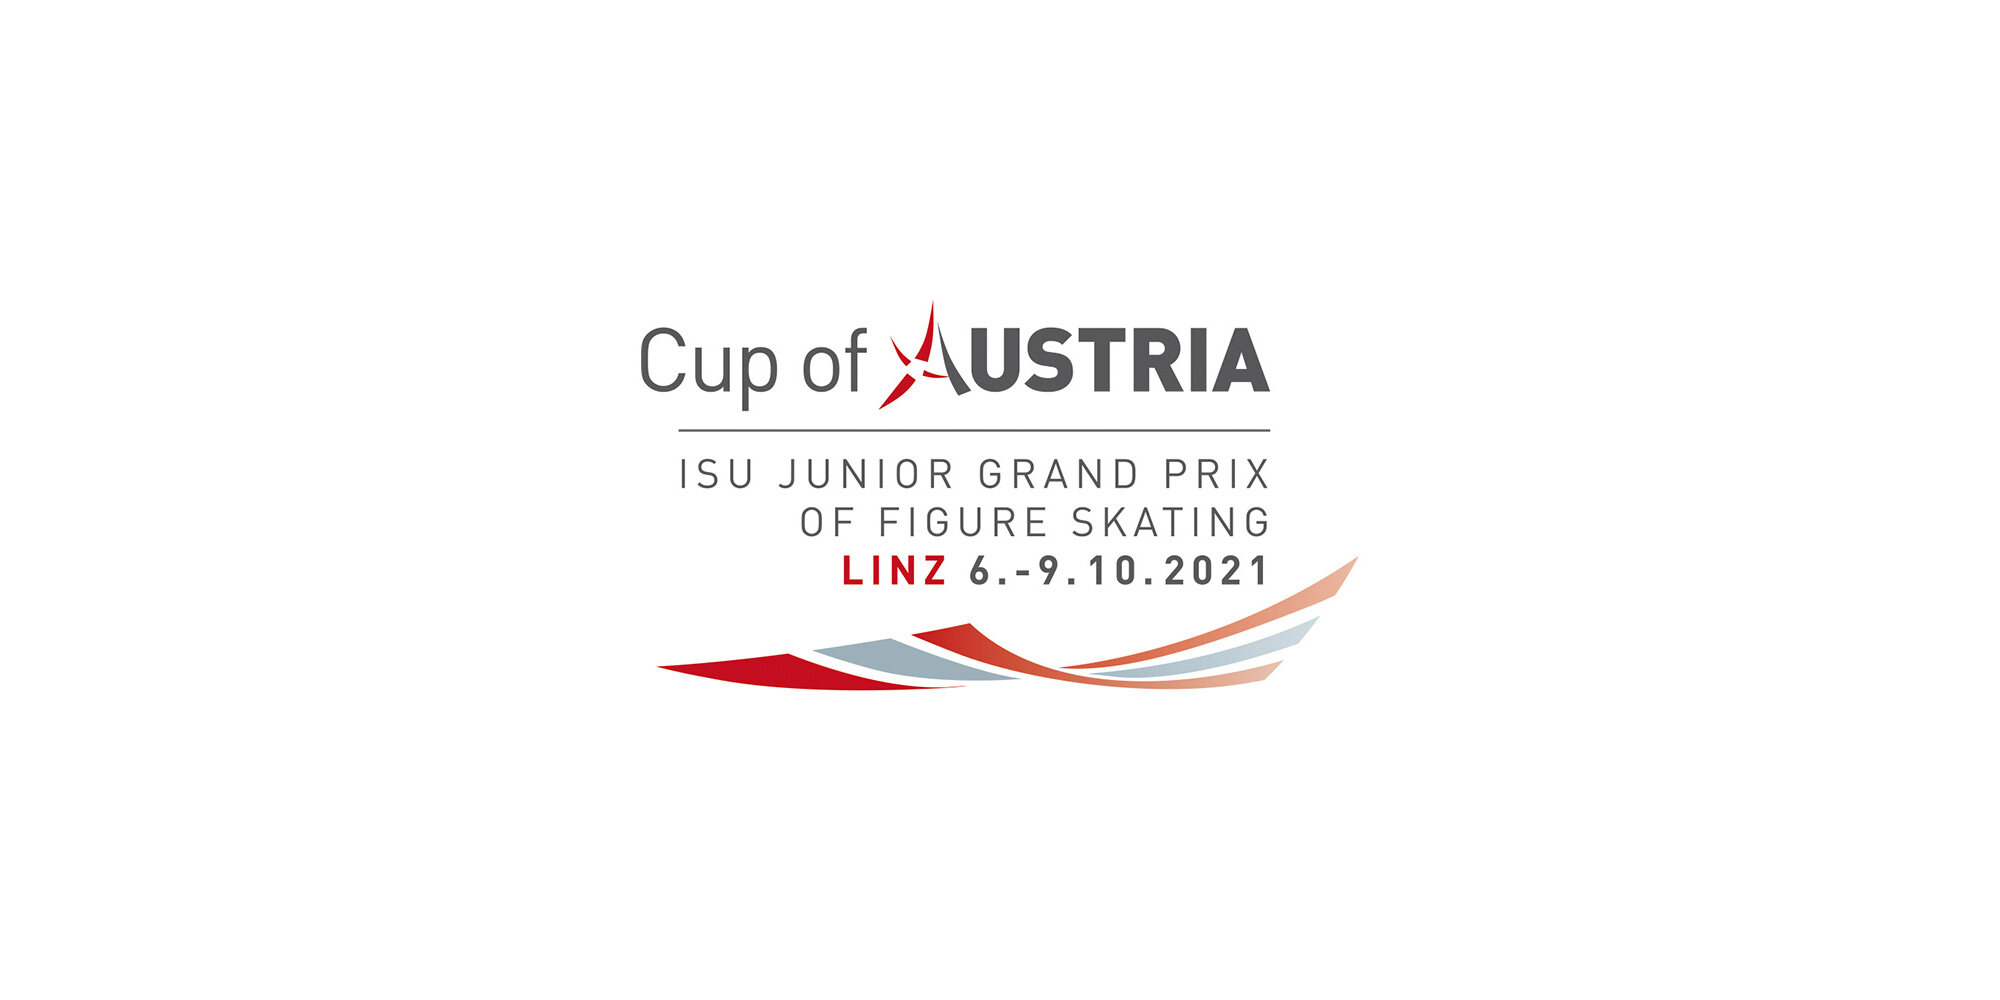 Junior Grand Prix Cup of Austria 2021 — In The Loop